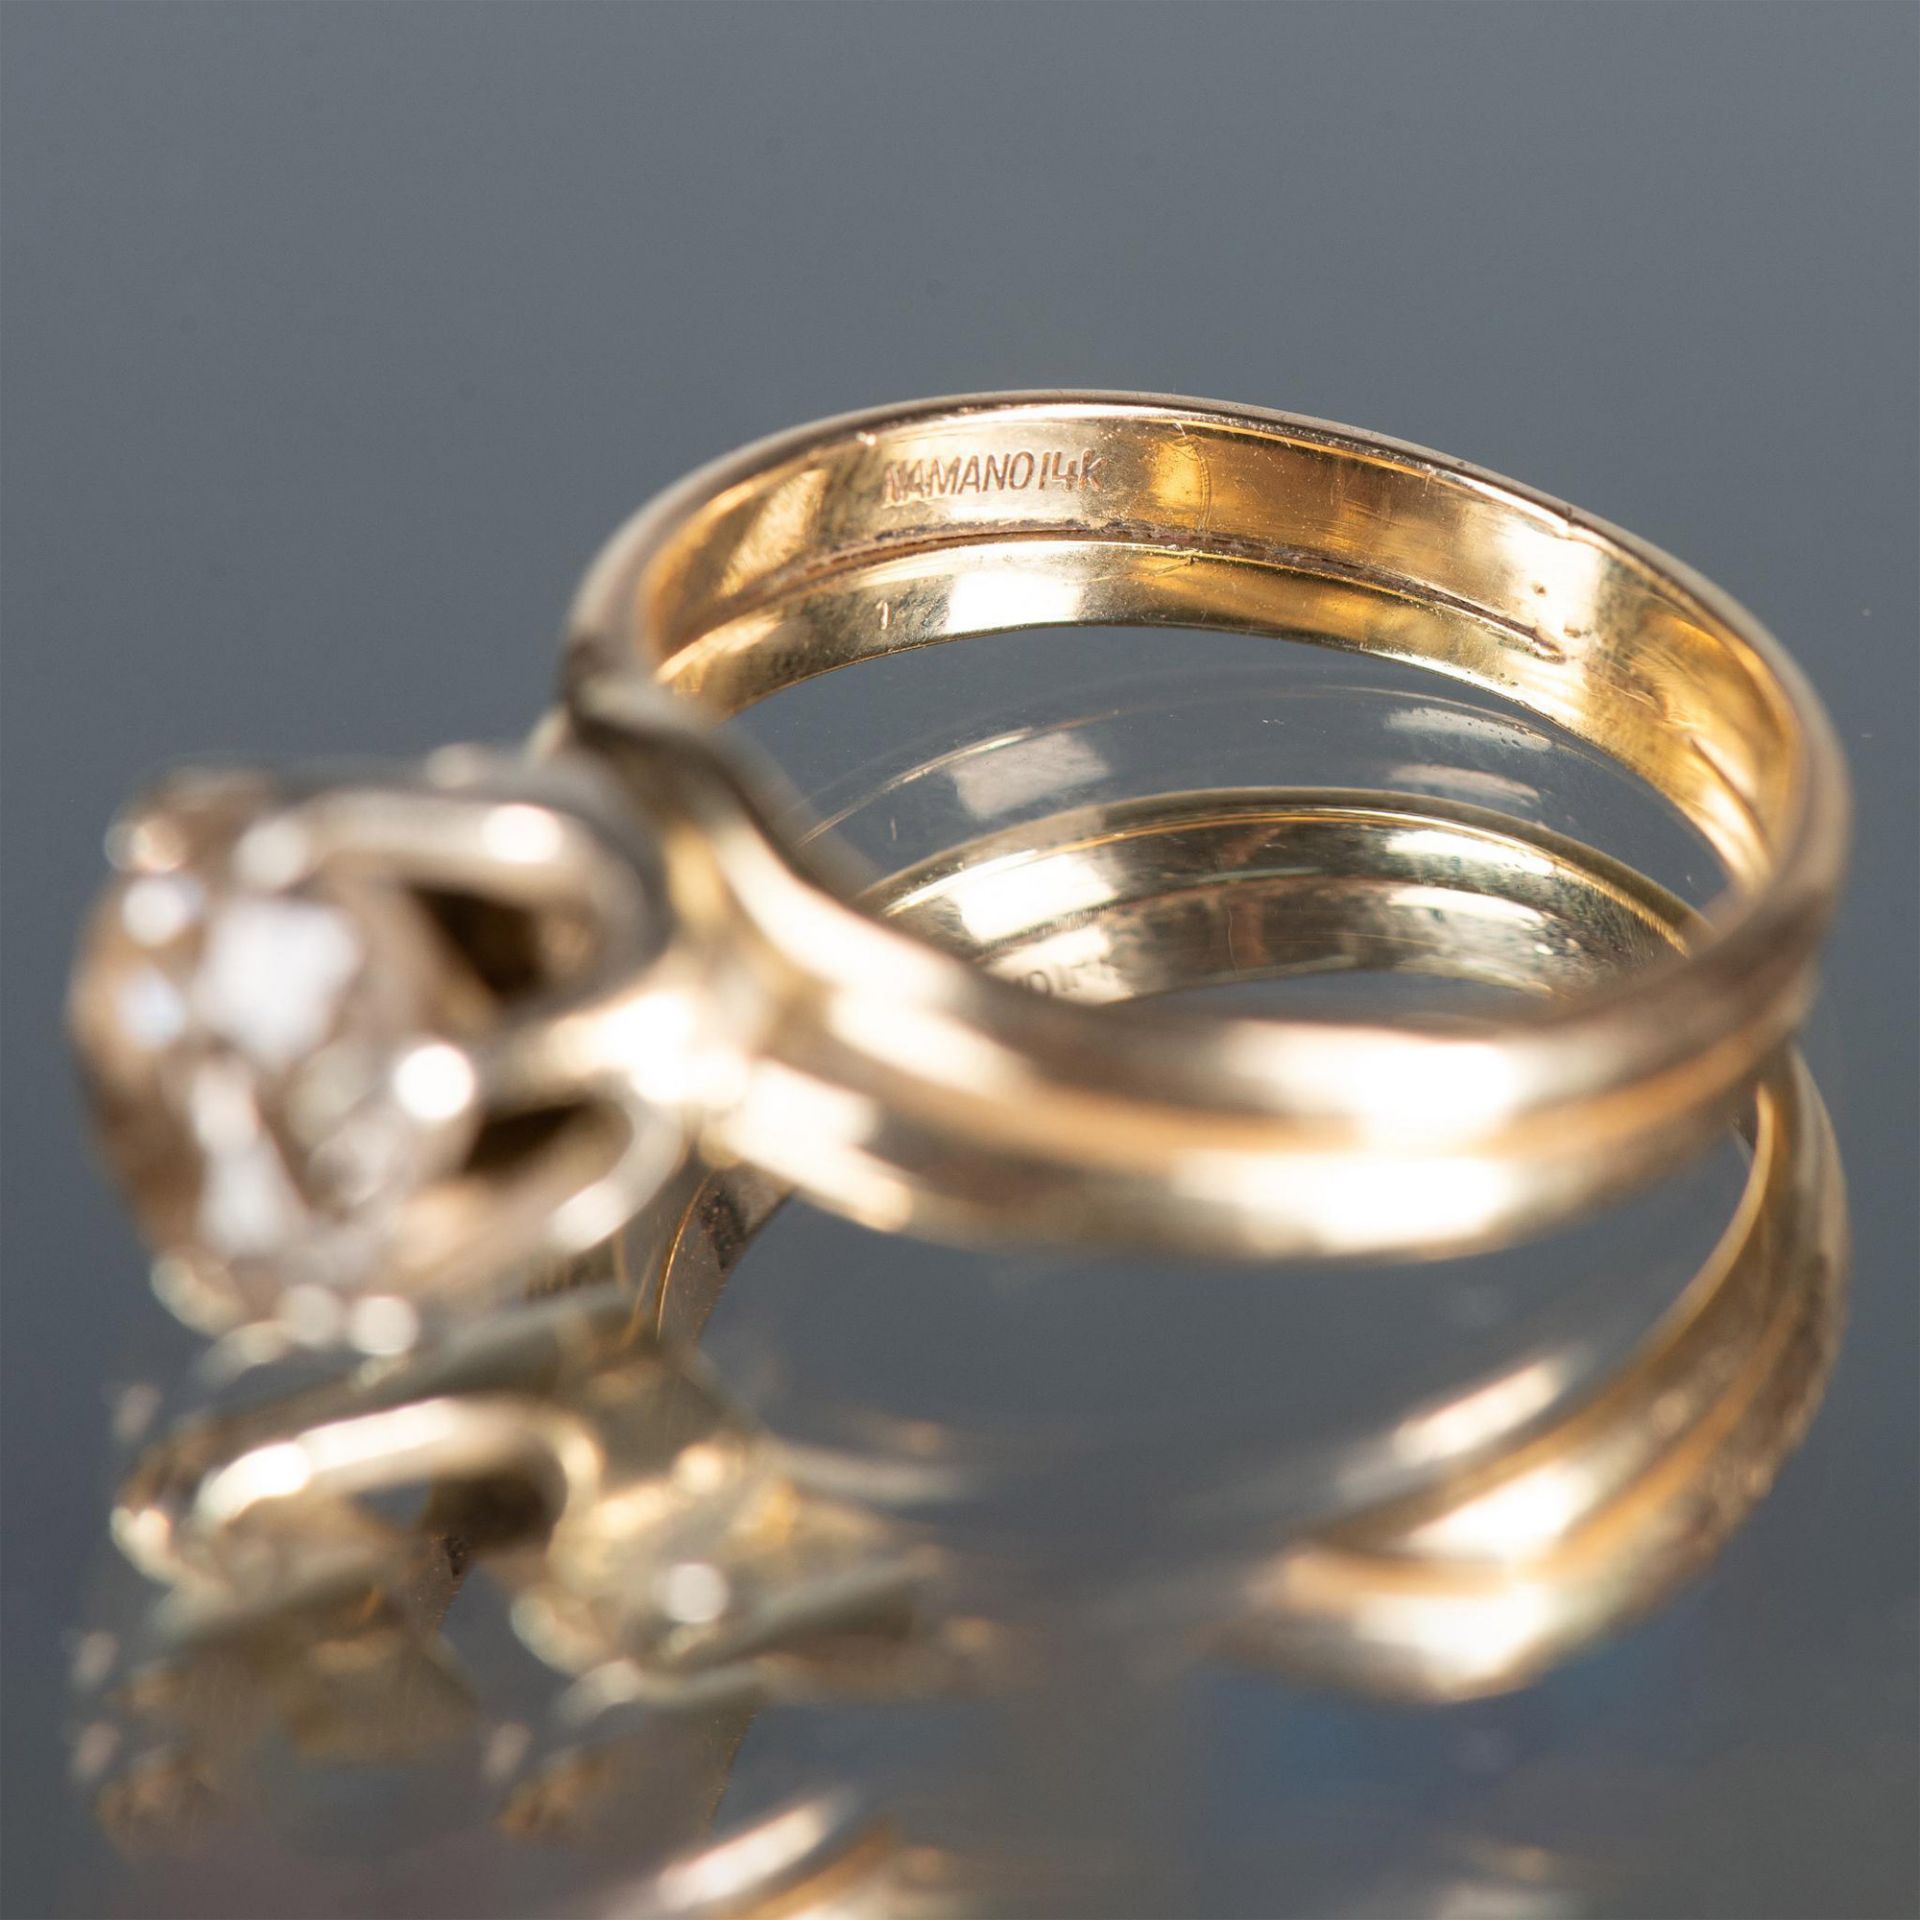 Stunning 3ct Diamond Ring in 14K Gold - Image 3 of 5